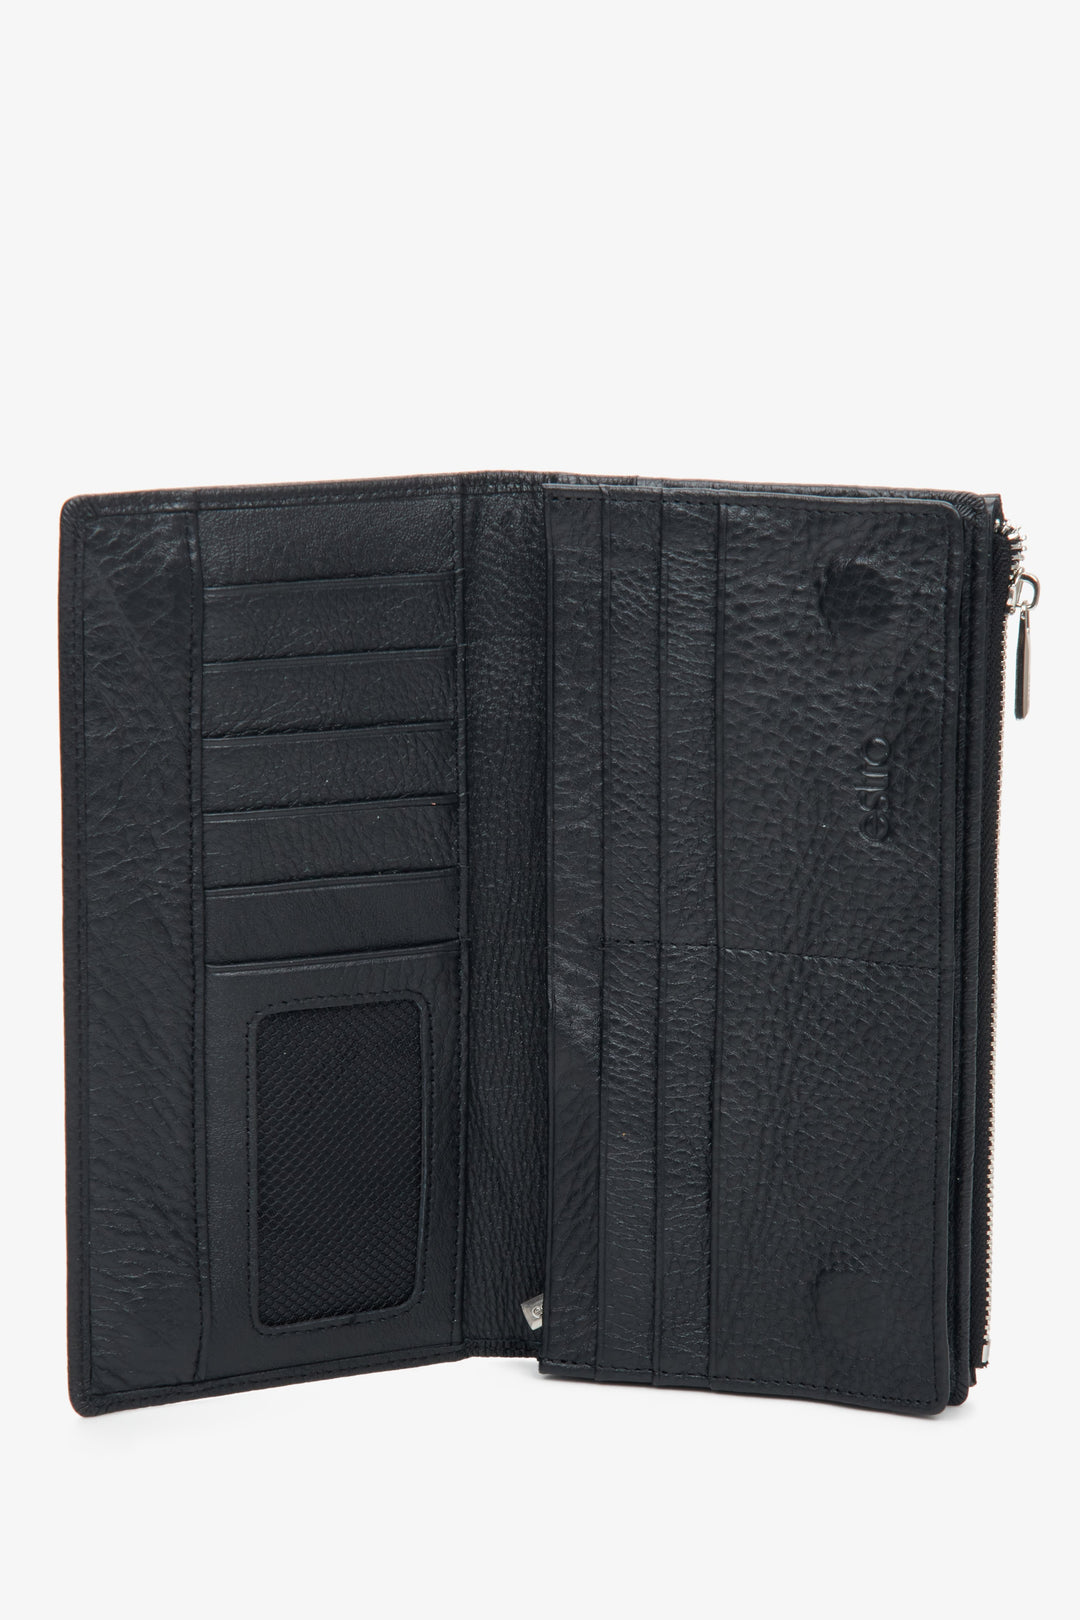 Estro men's black leather wallet - interior of the model.